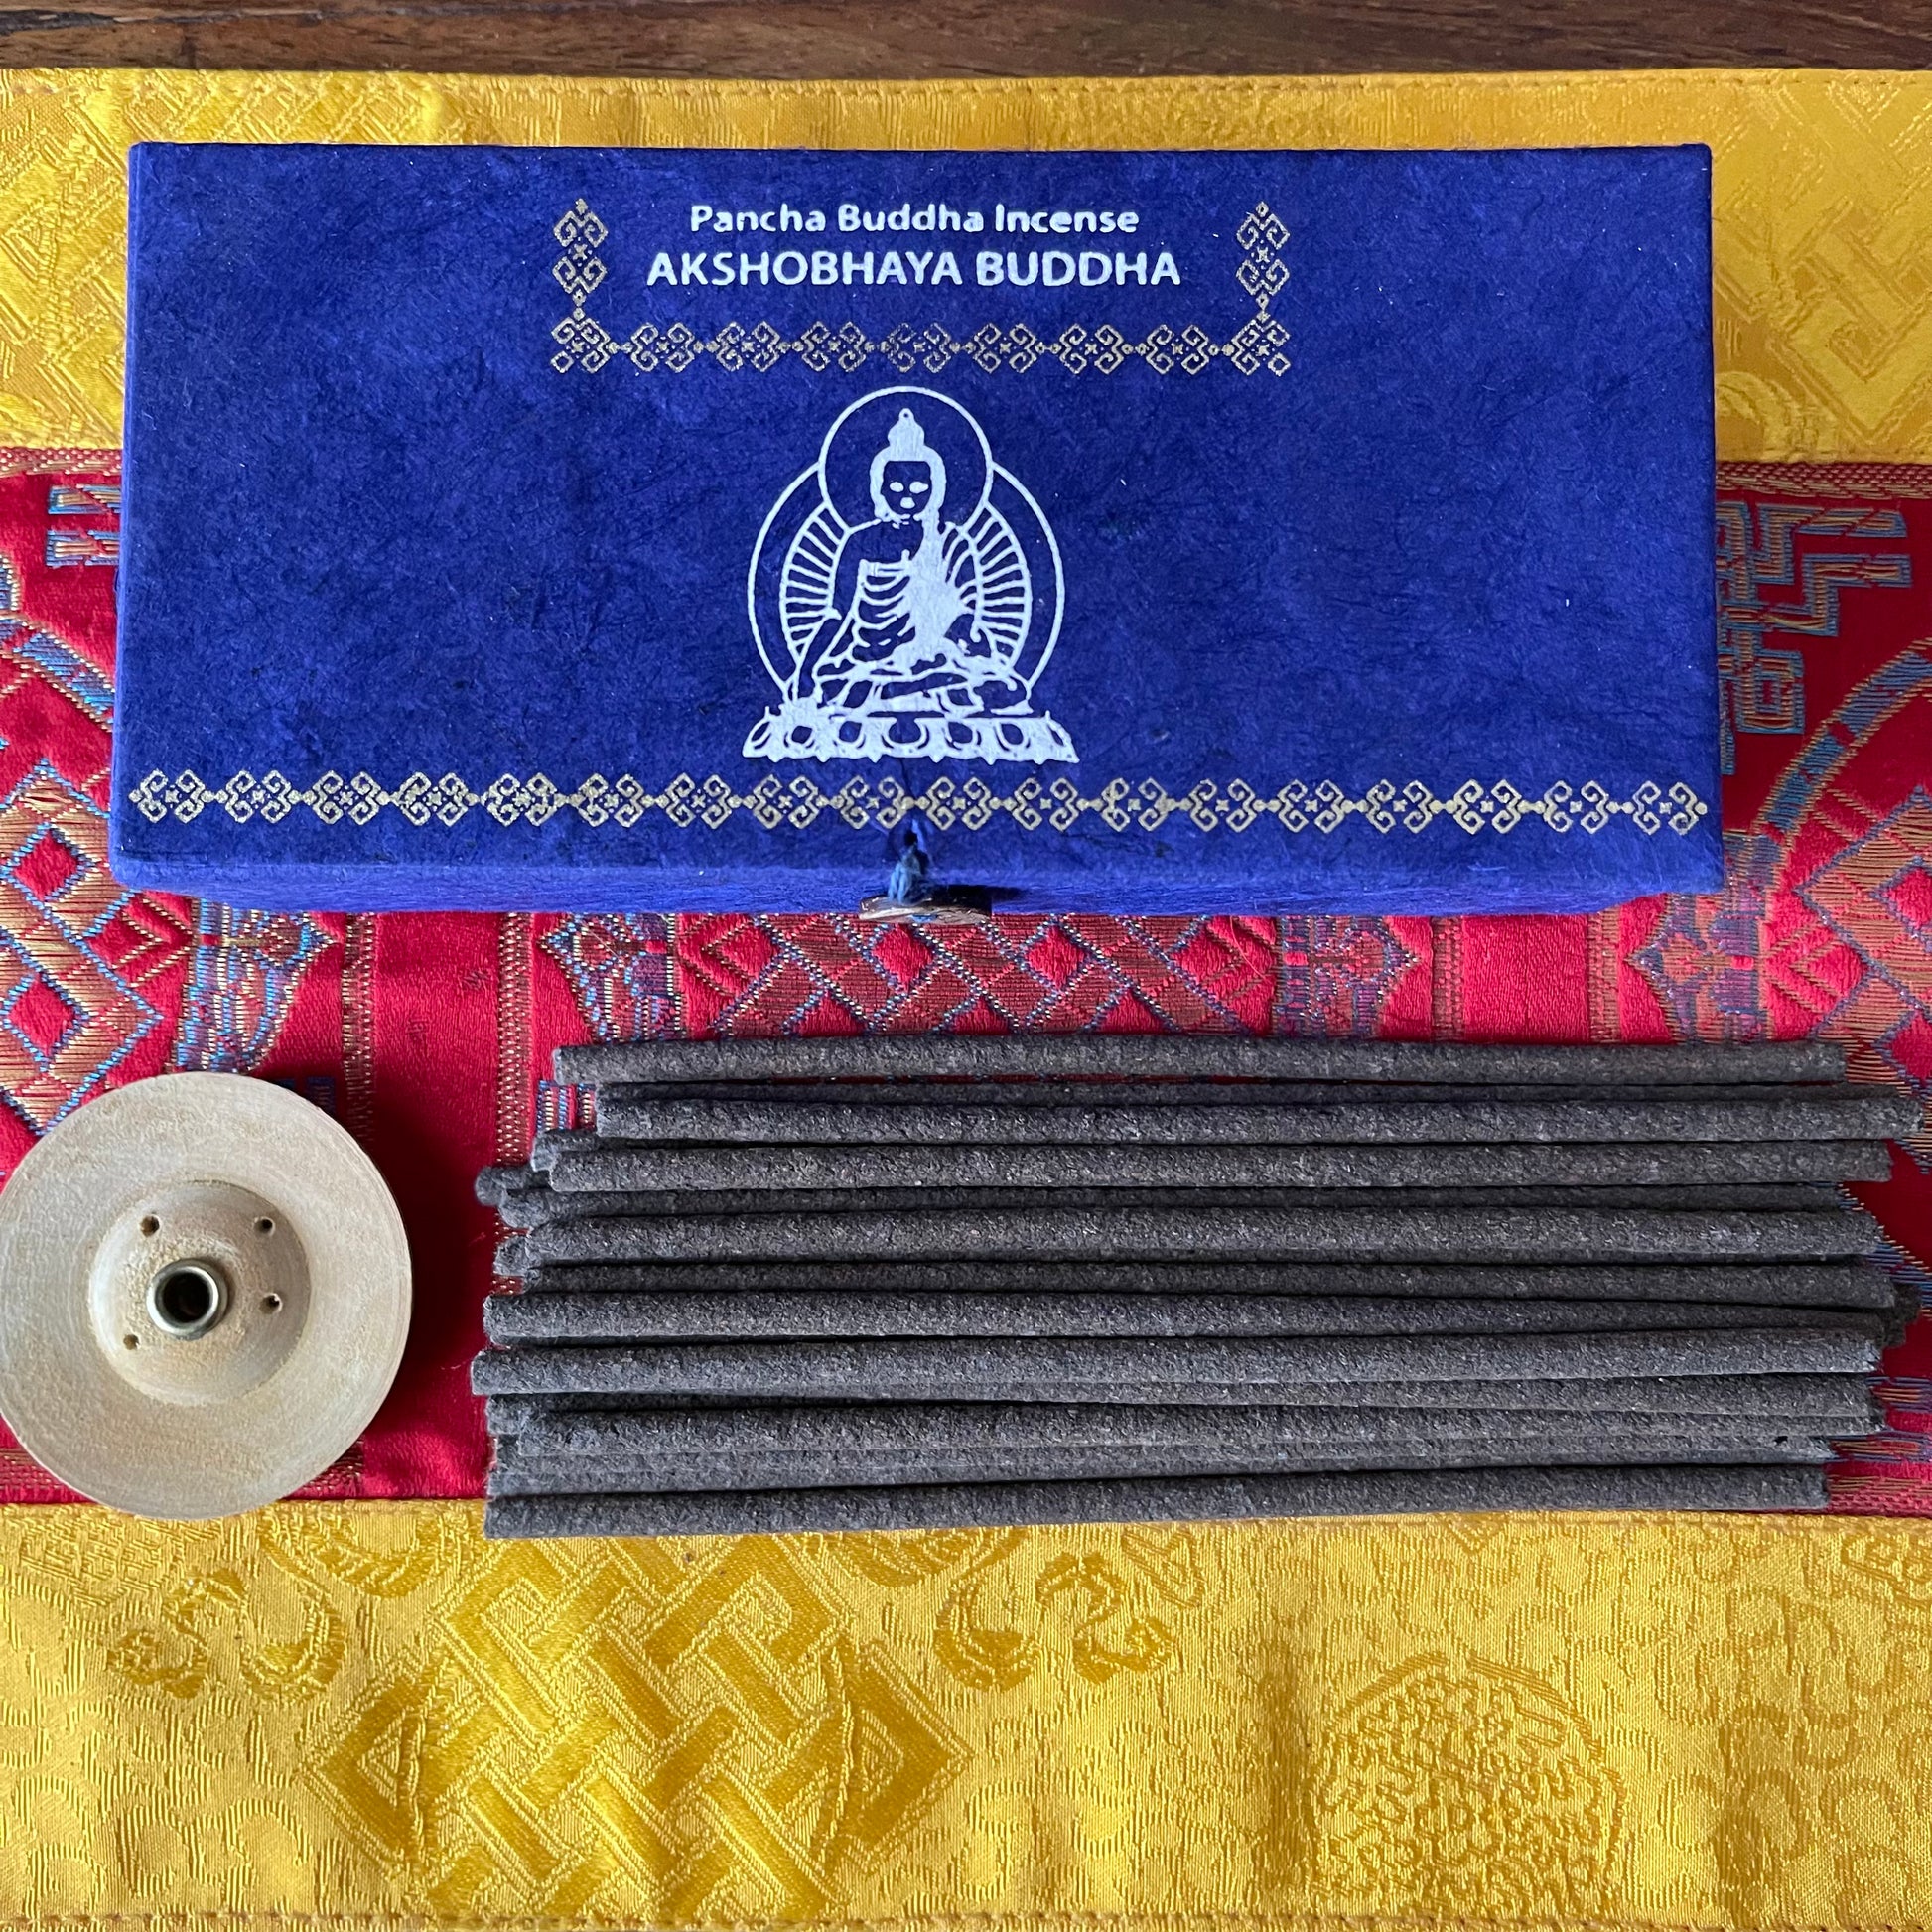 Akshobhya buddha incense gift pack | Authentic Buddhist Incense